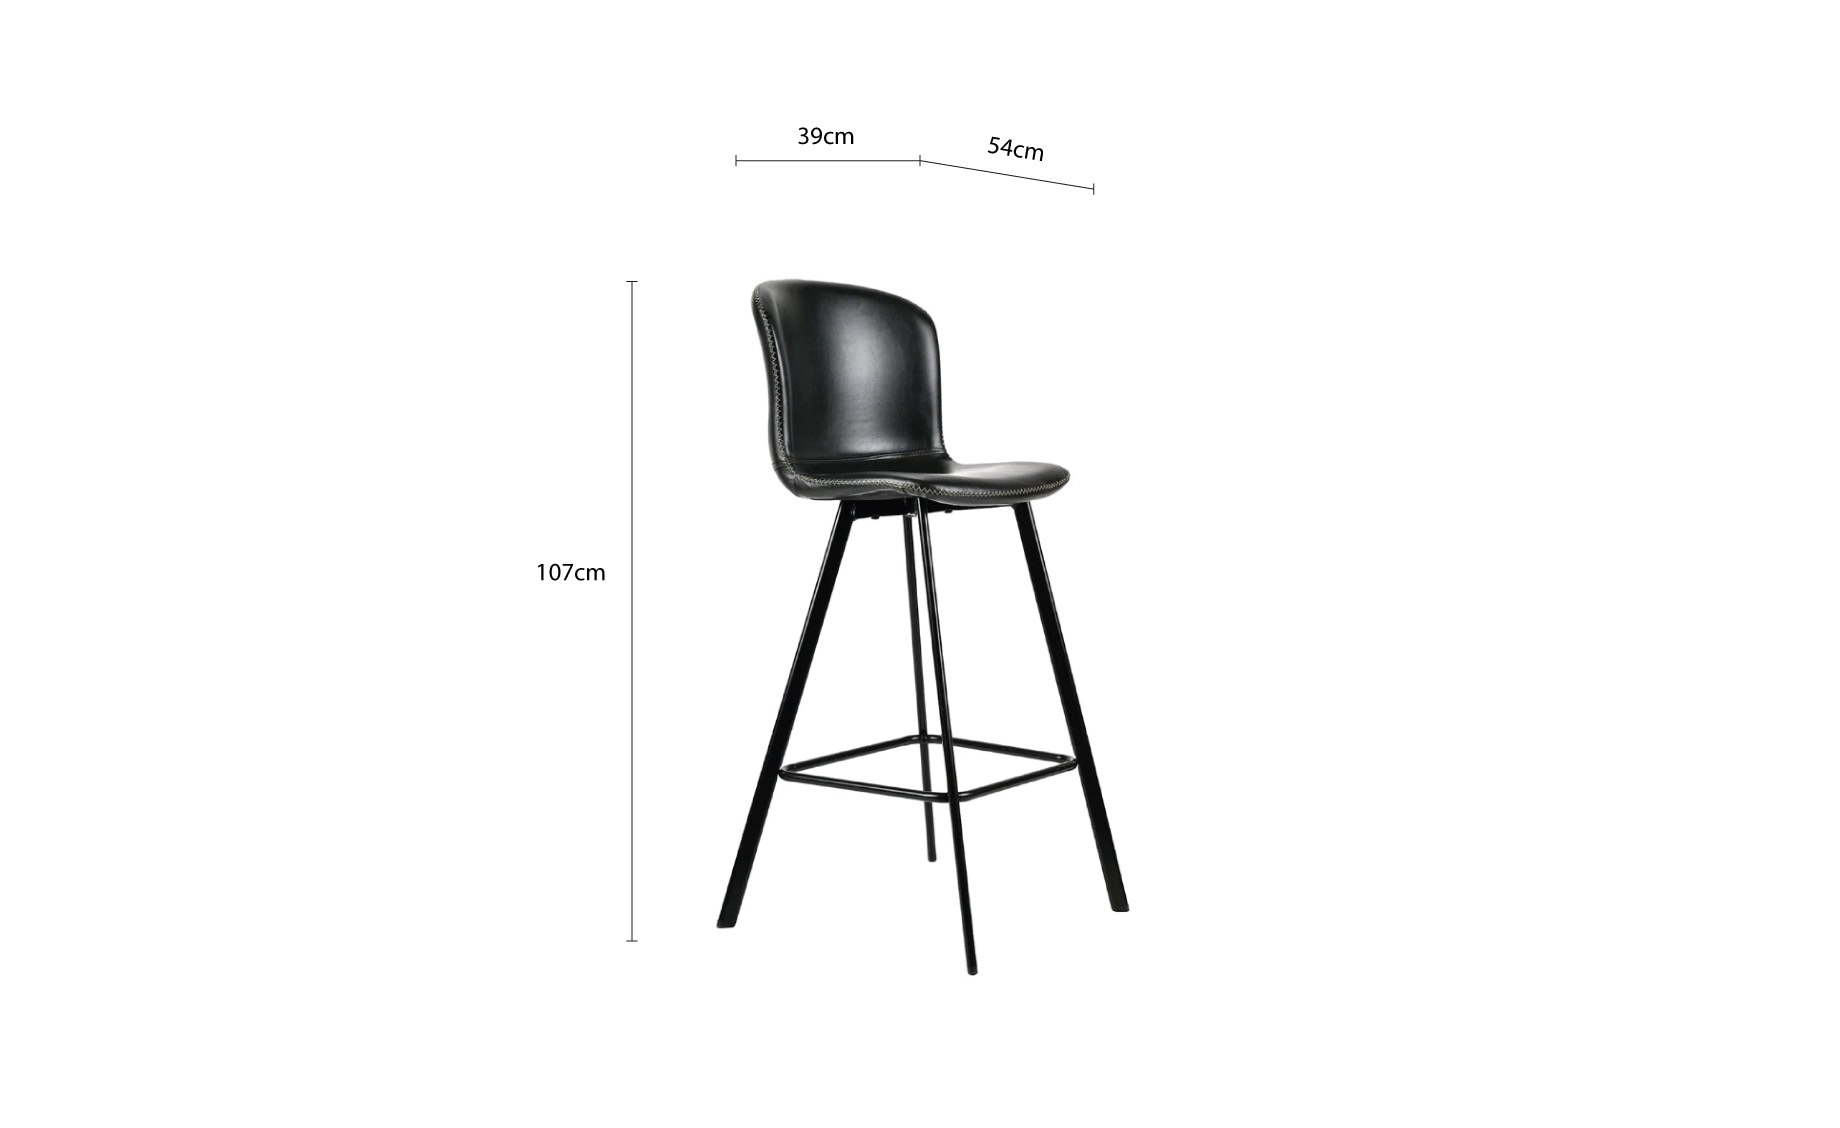 Dex barska stolica 39x54x107cm antracit